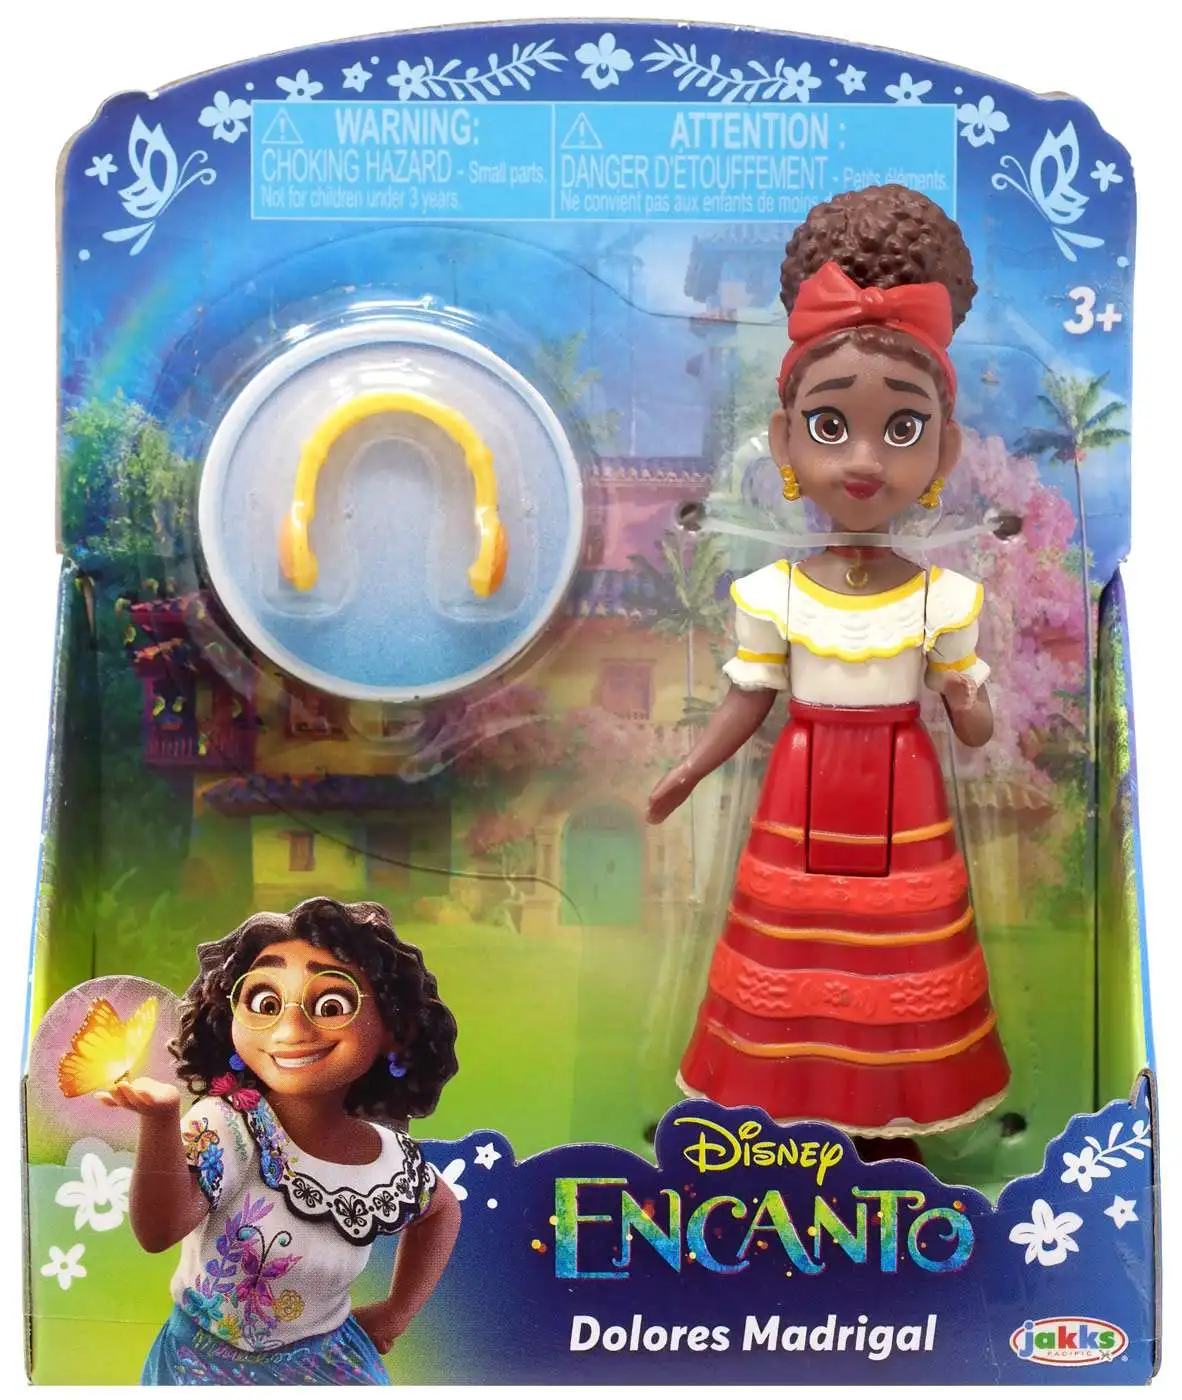 Disney Encanto - JAKKS Pacific, Inc.